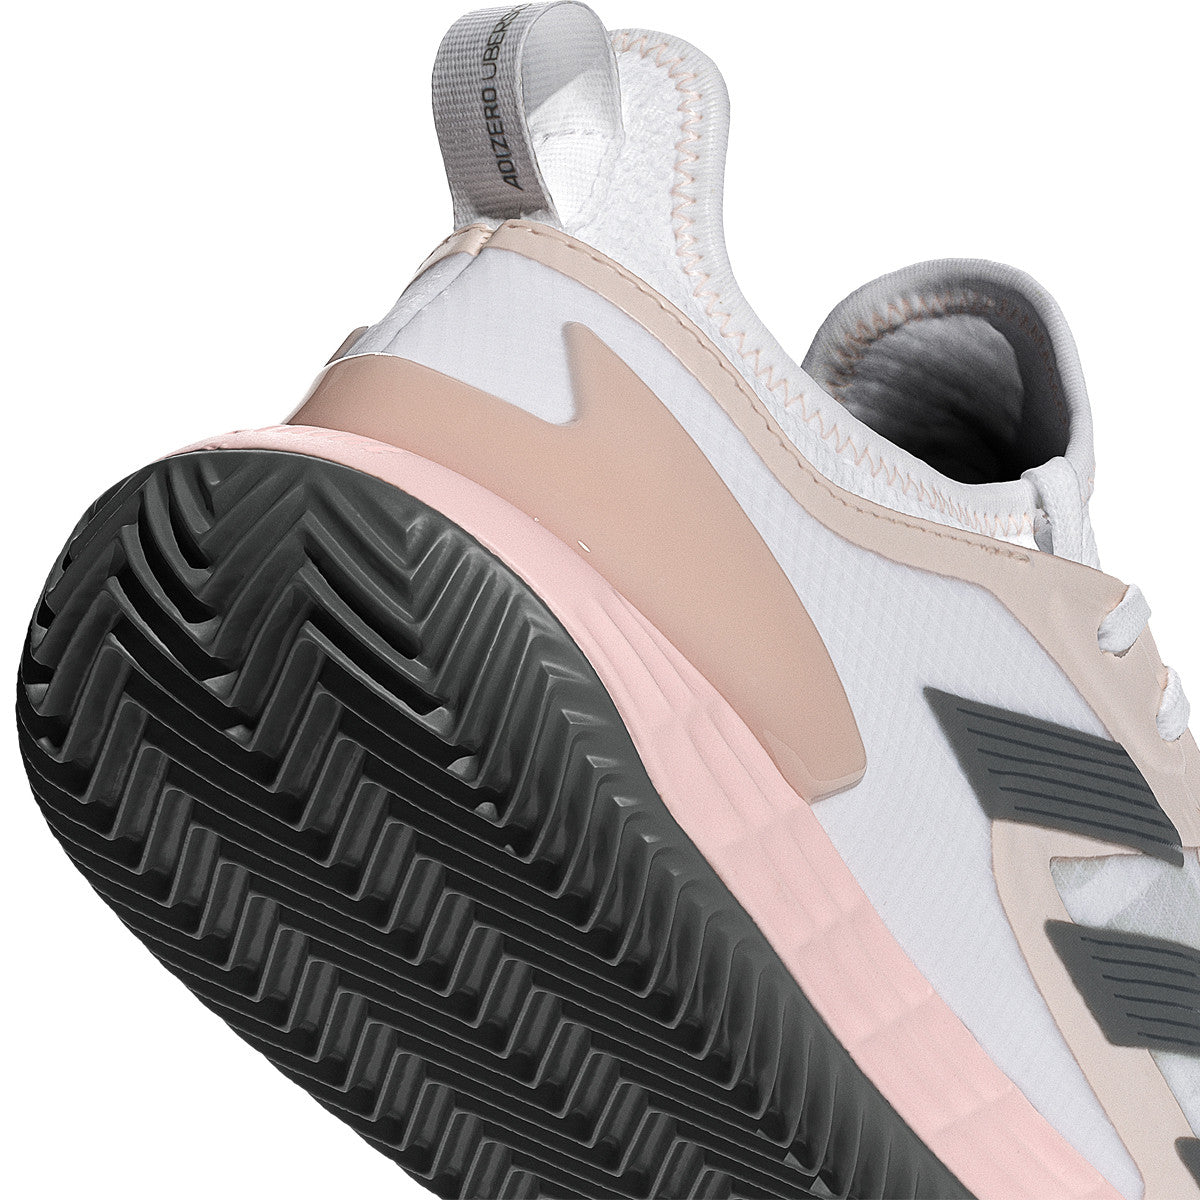 Chaussures Adidas Ubersonic 4.1 W